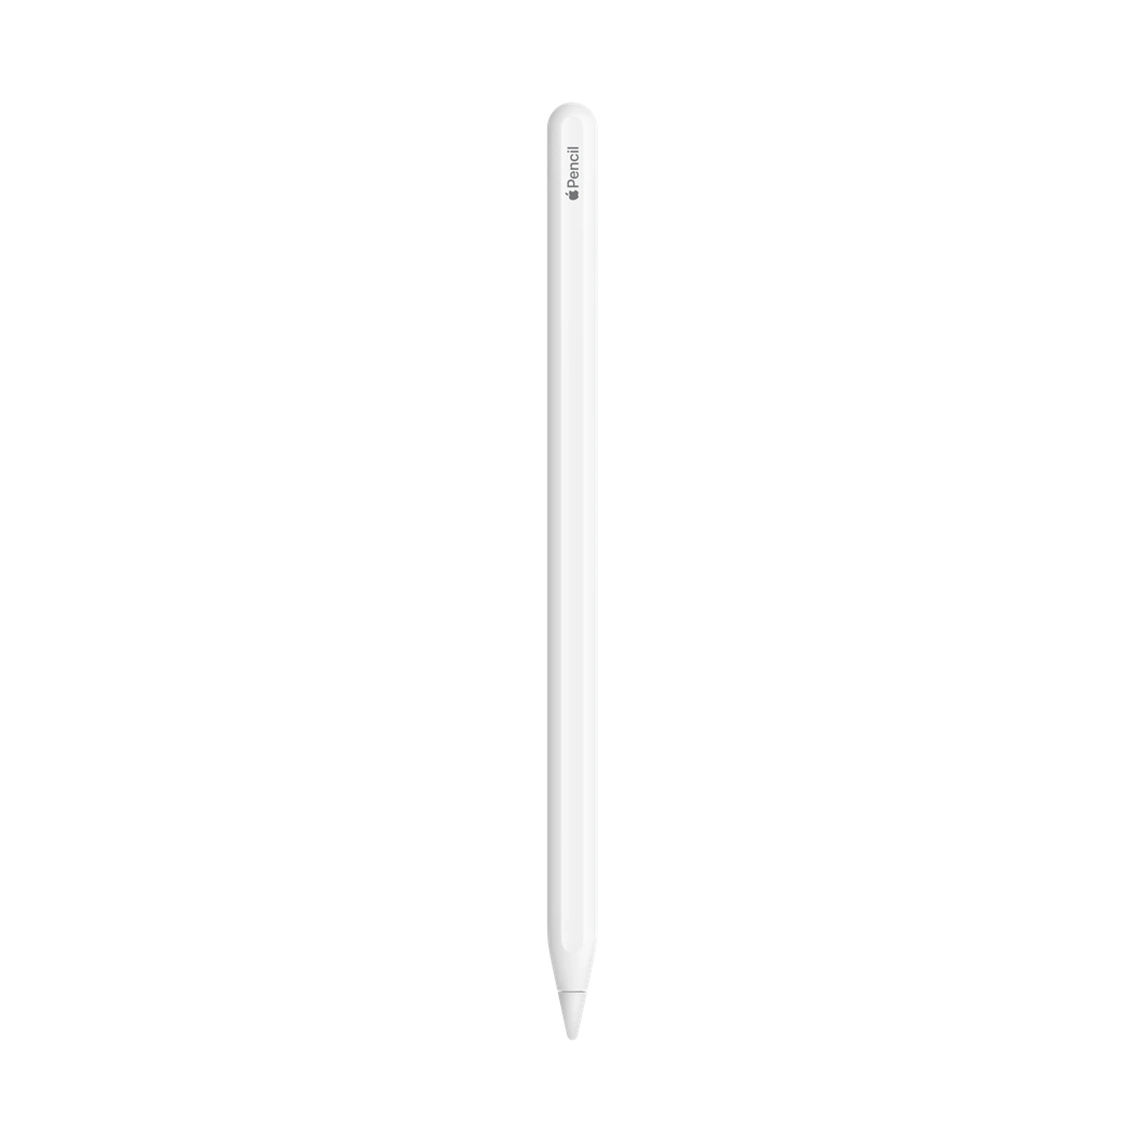 Apple iPad Pro M1 12.9-inch 128GB Wi-Fi